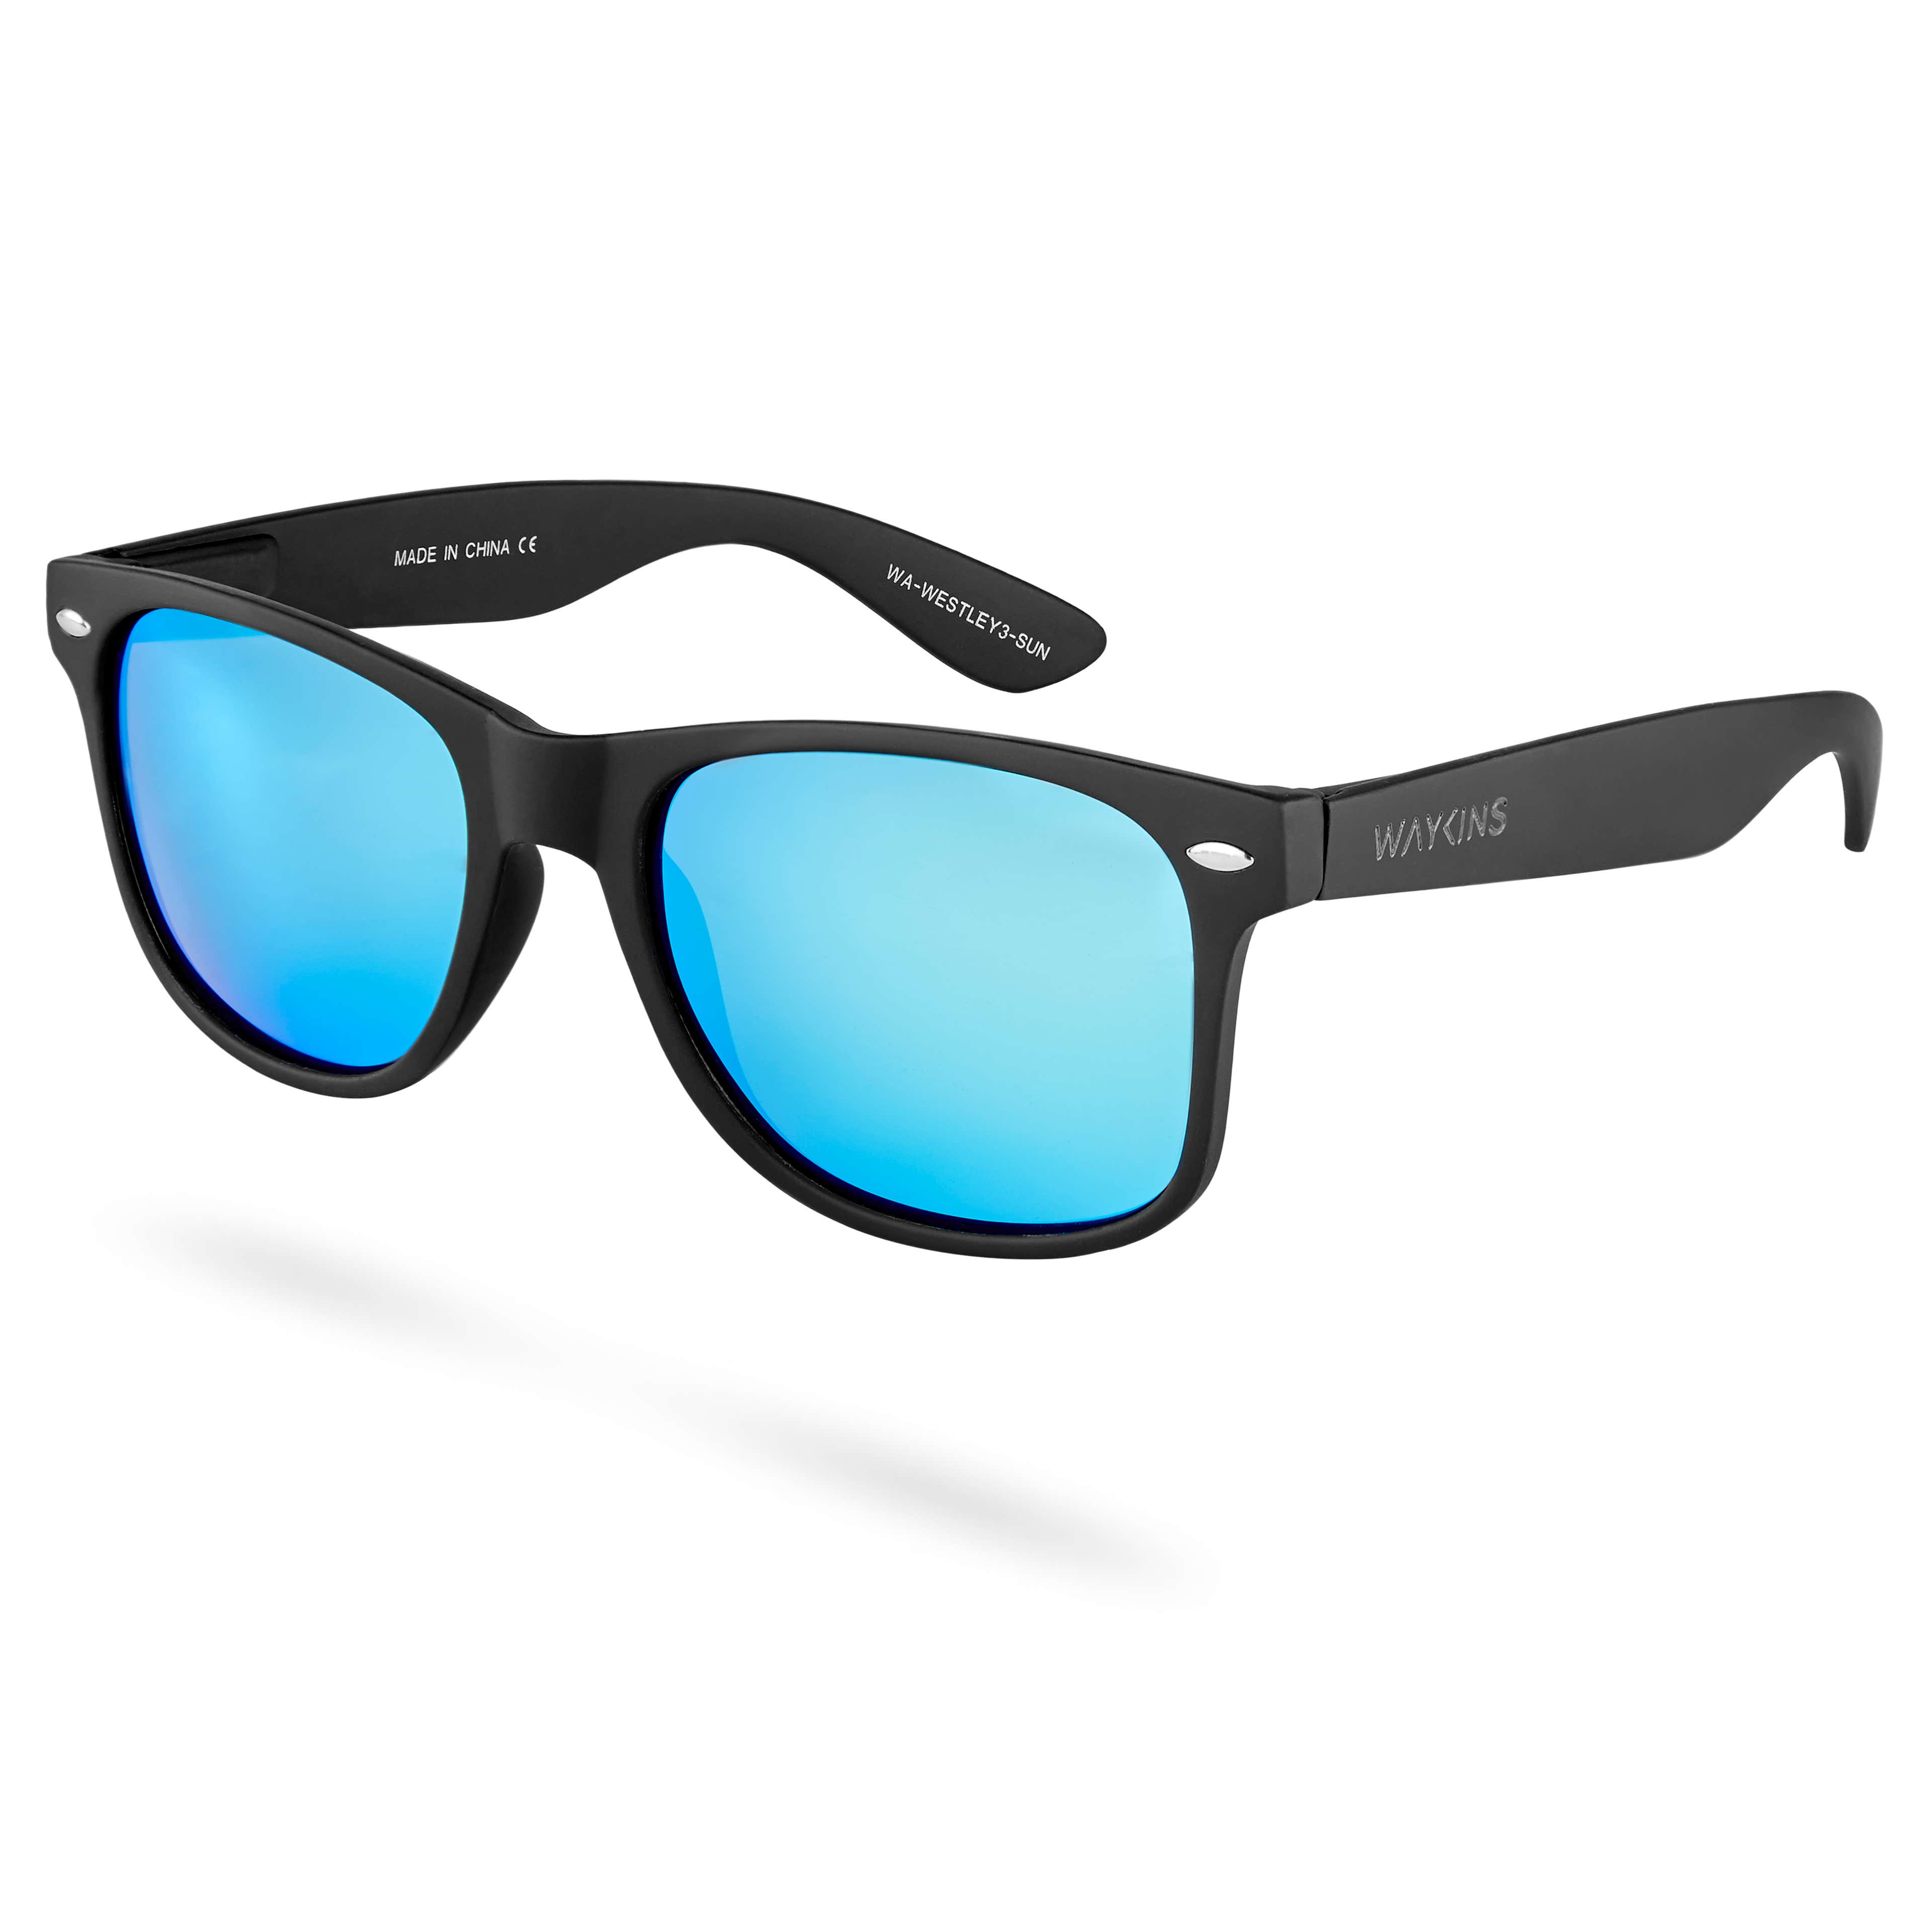 Westley Vista Solbriller med Blå Speilglass